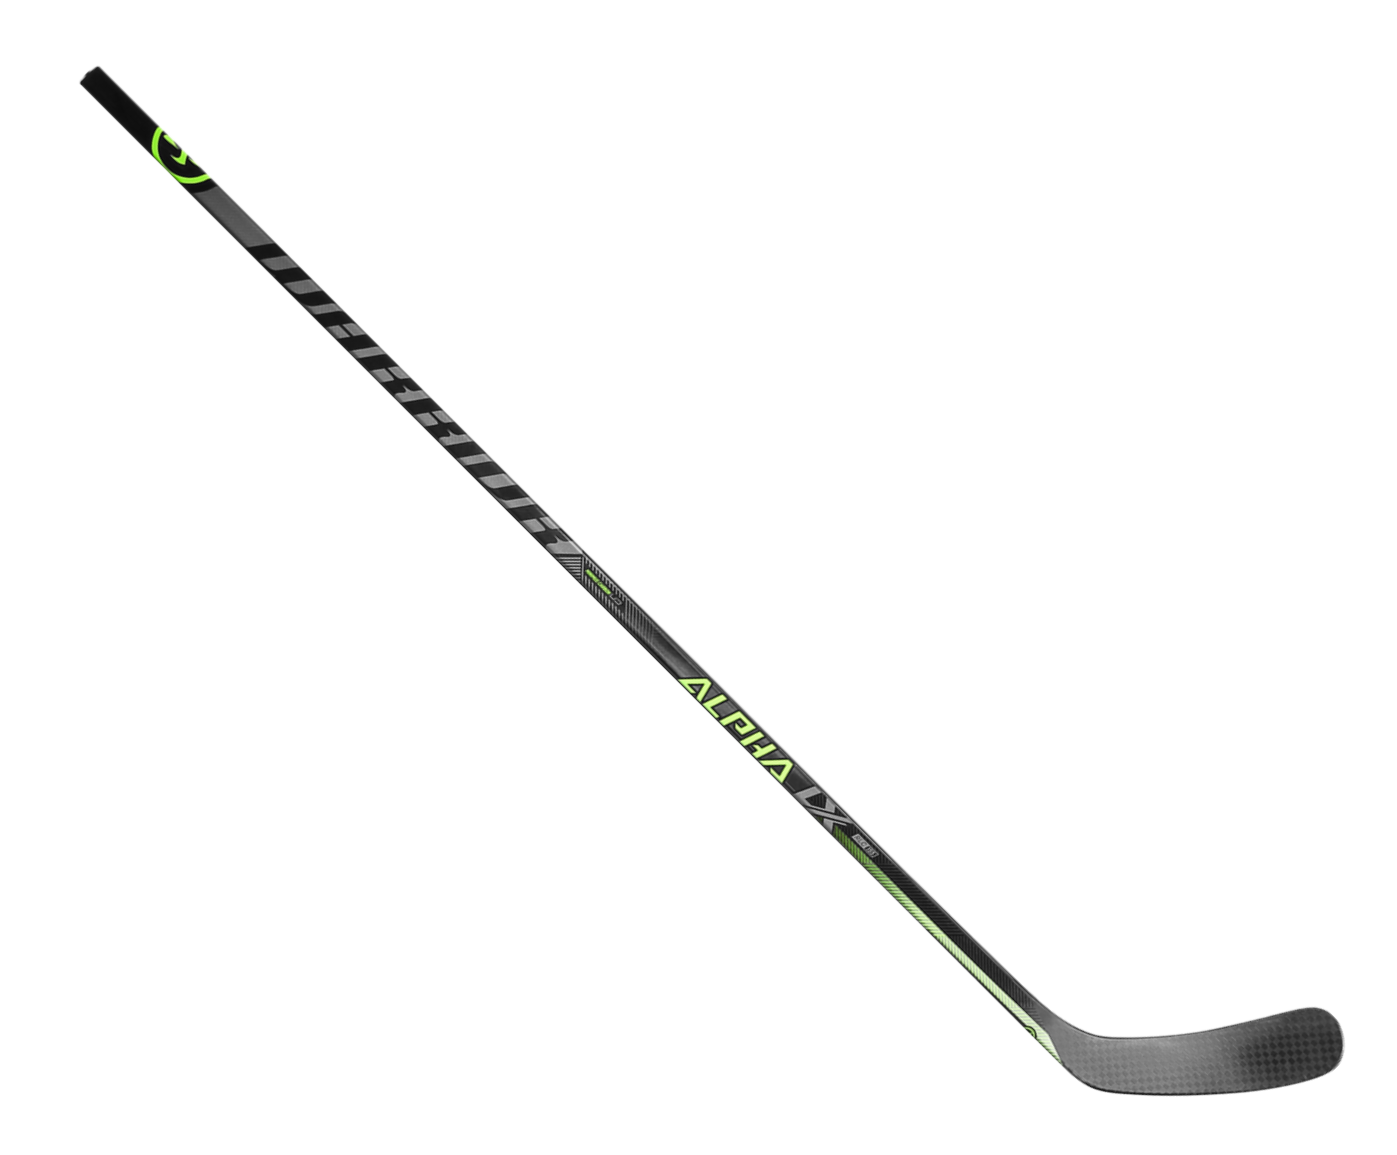 Warrior Alpha LX 20 Junior Hockey Stick